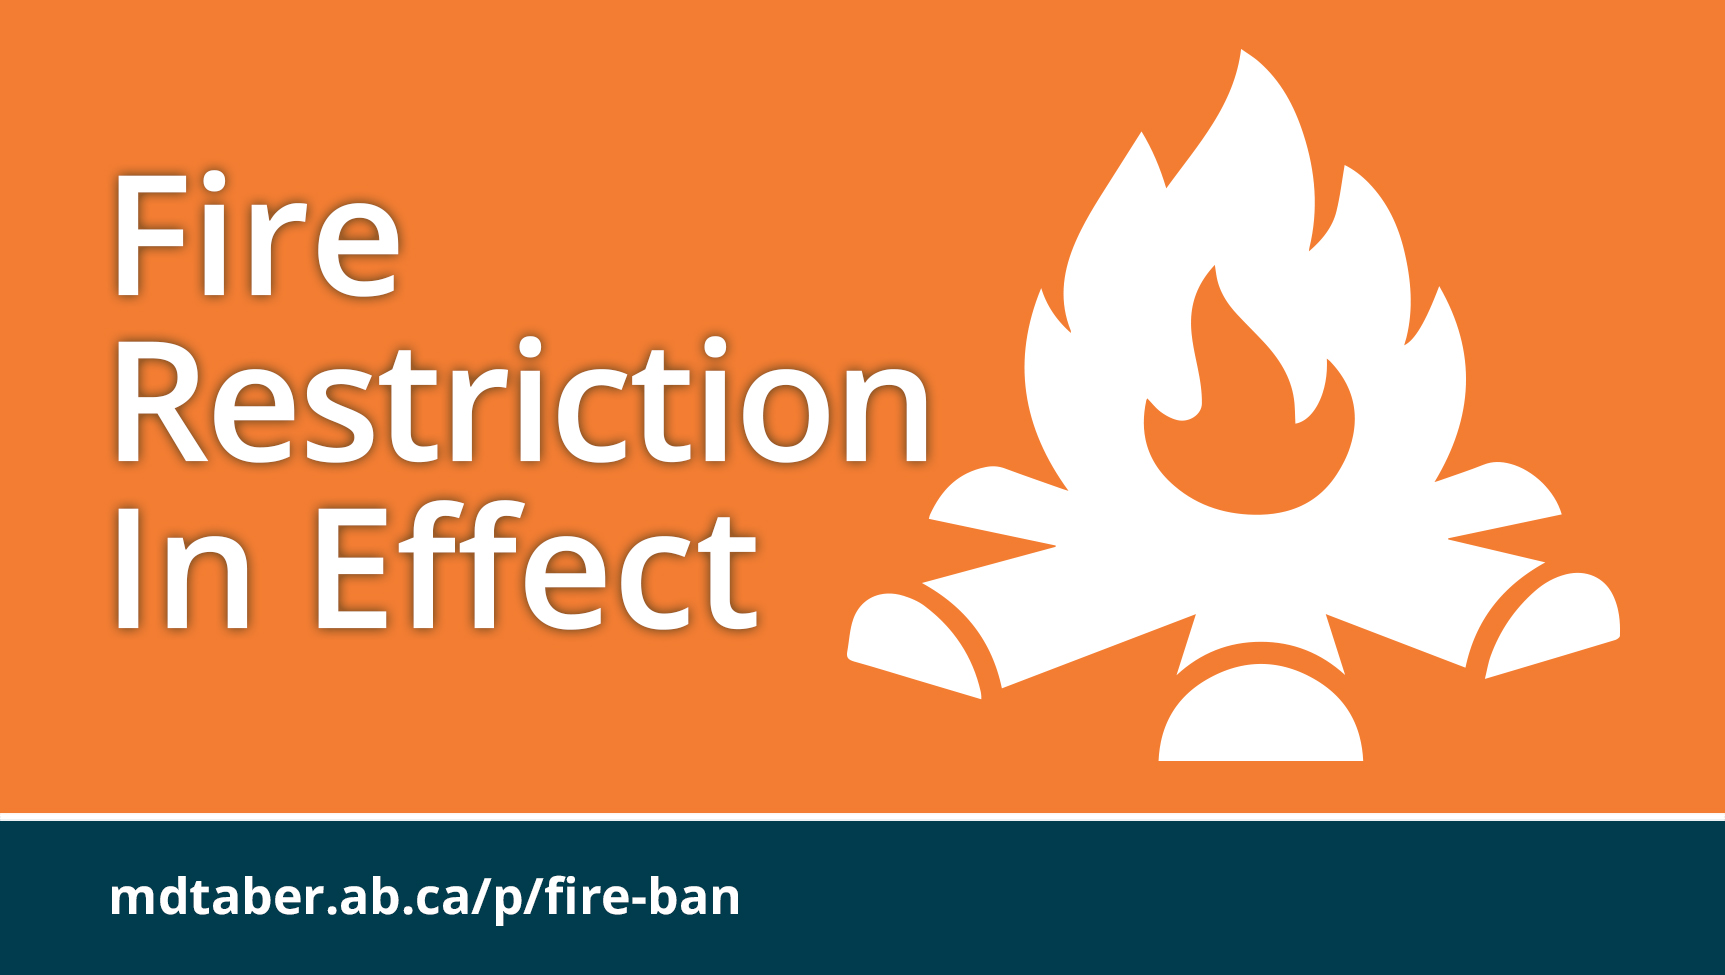 Fire Restriction in Effect